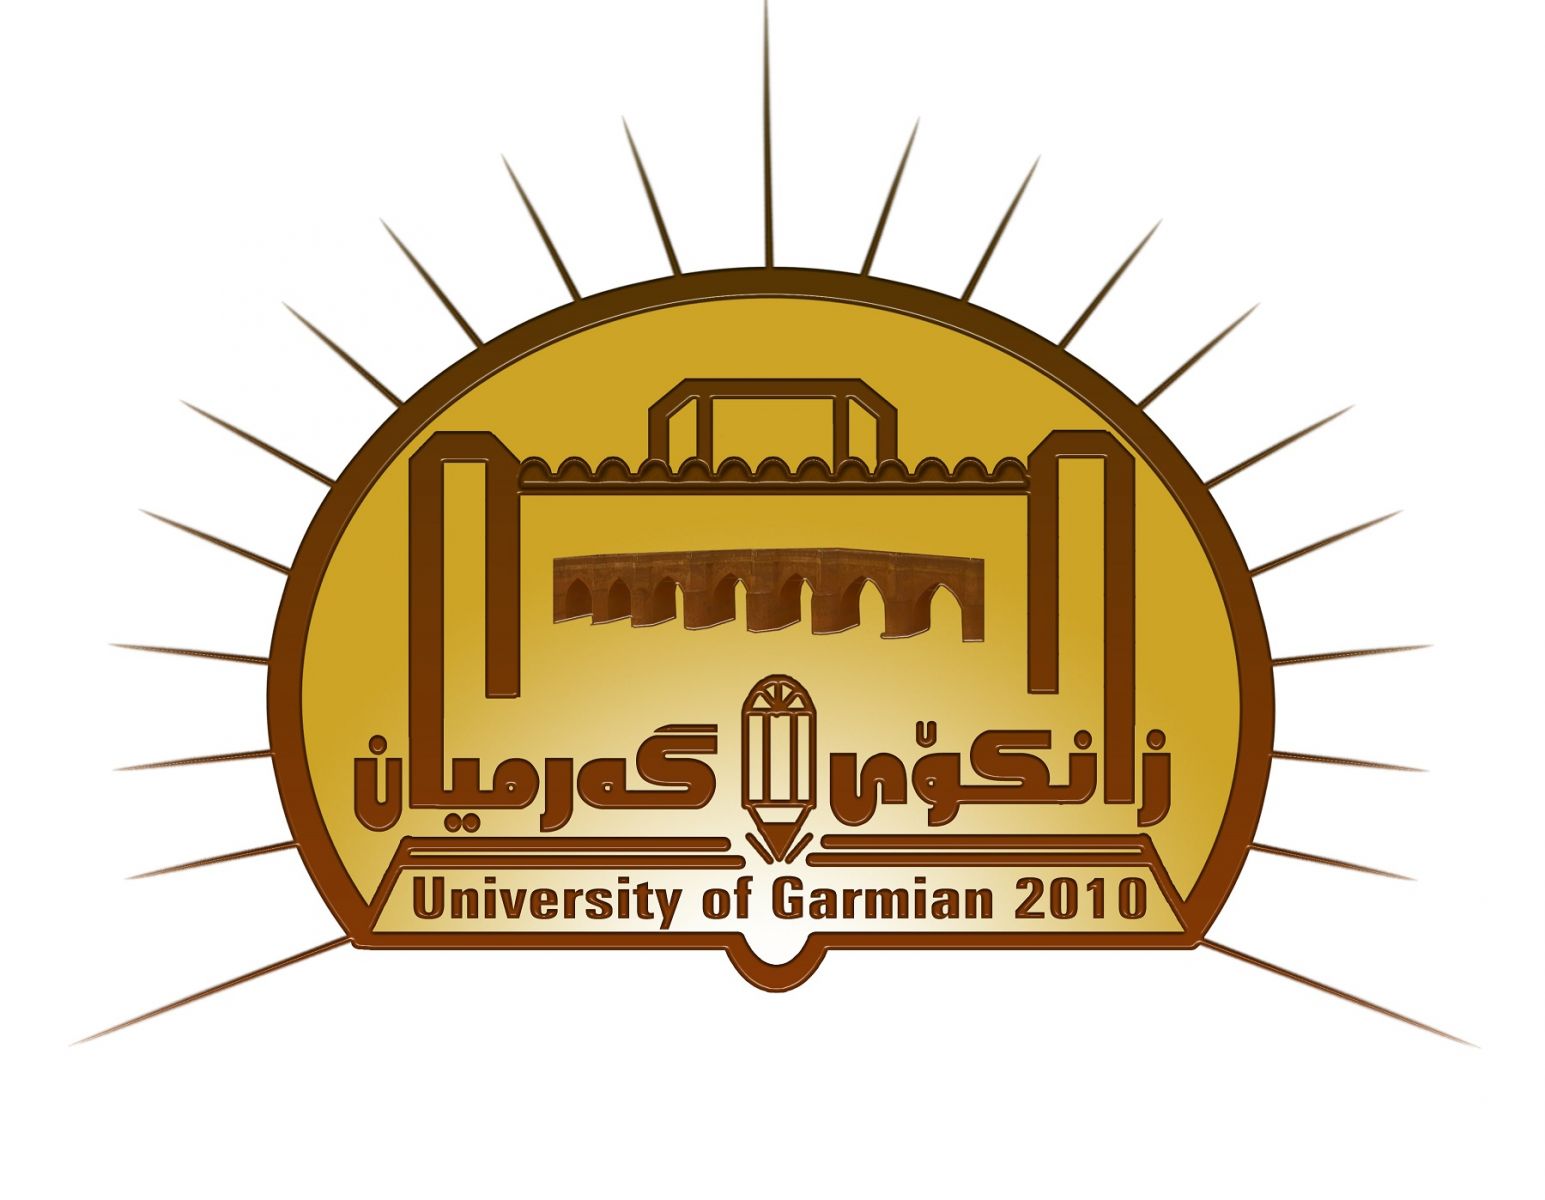 University of Garmian